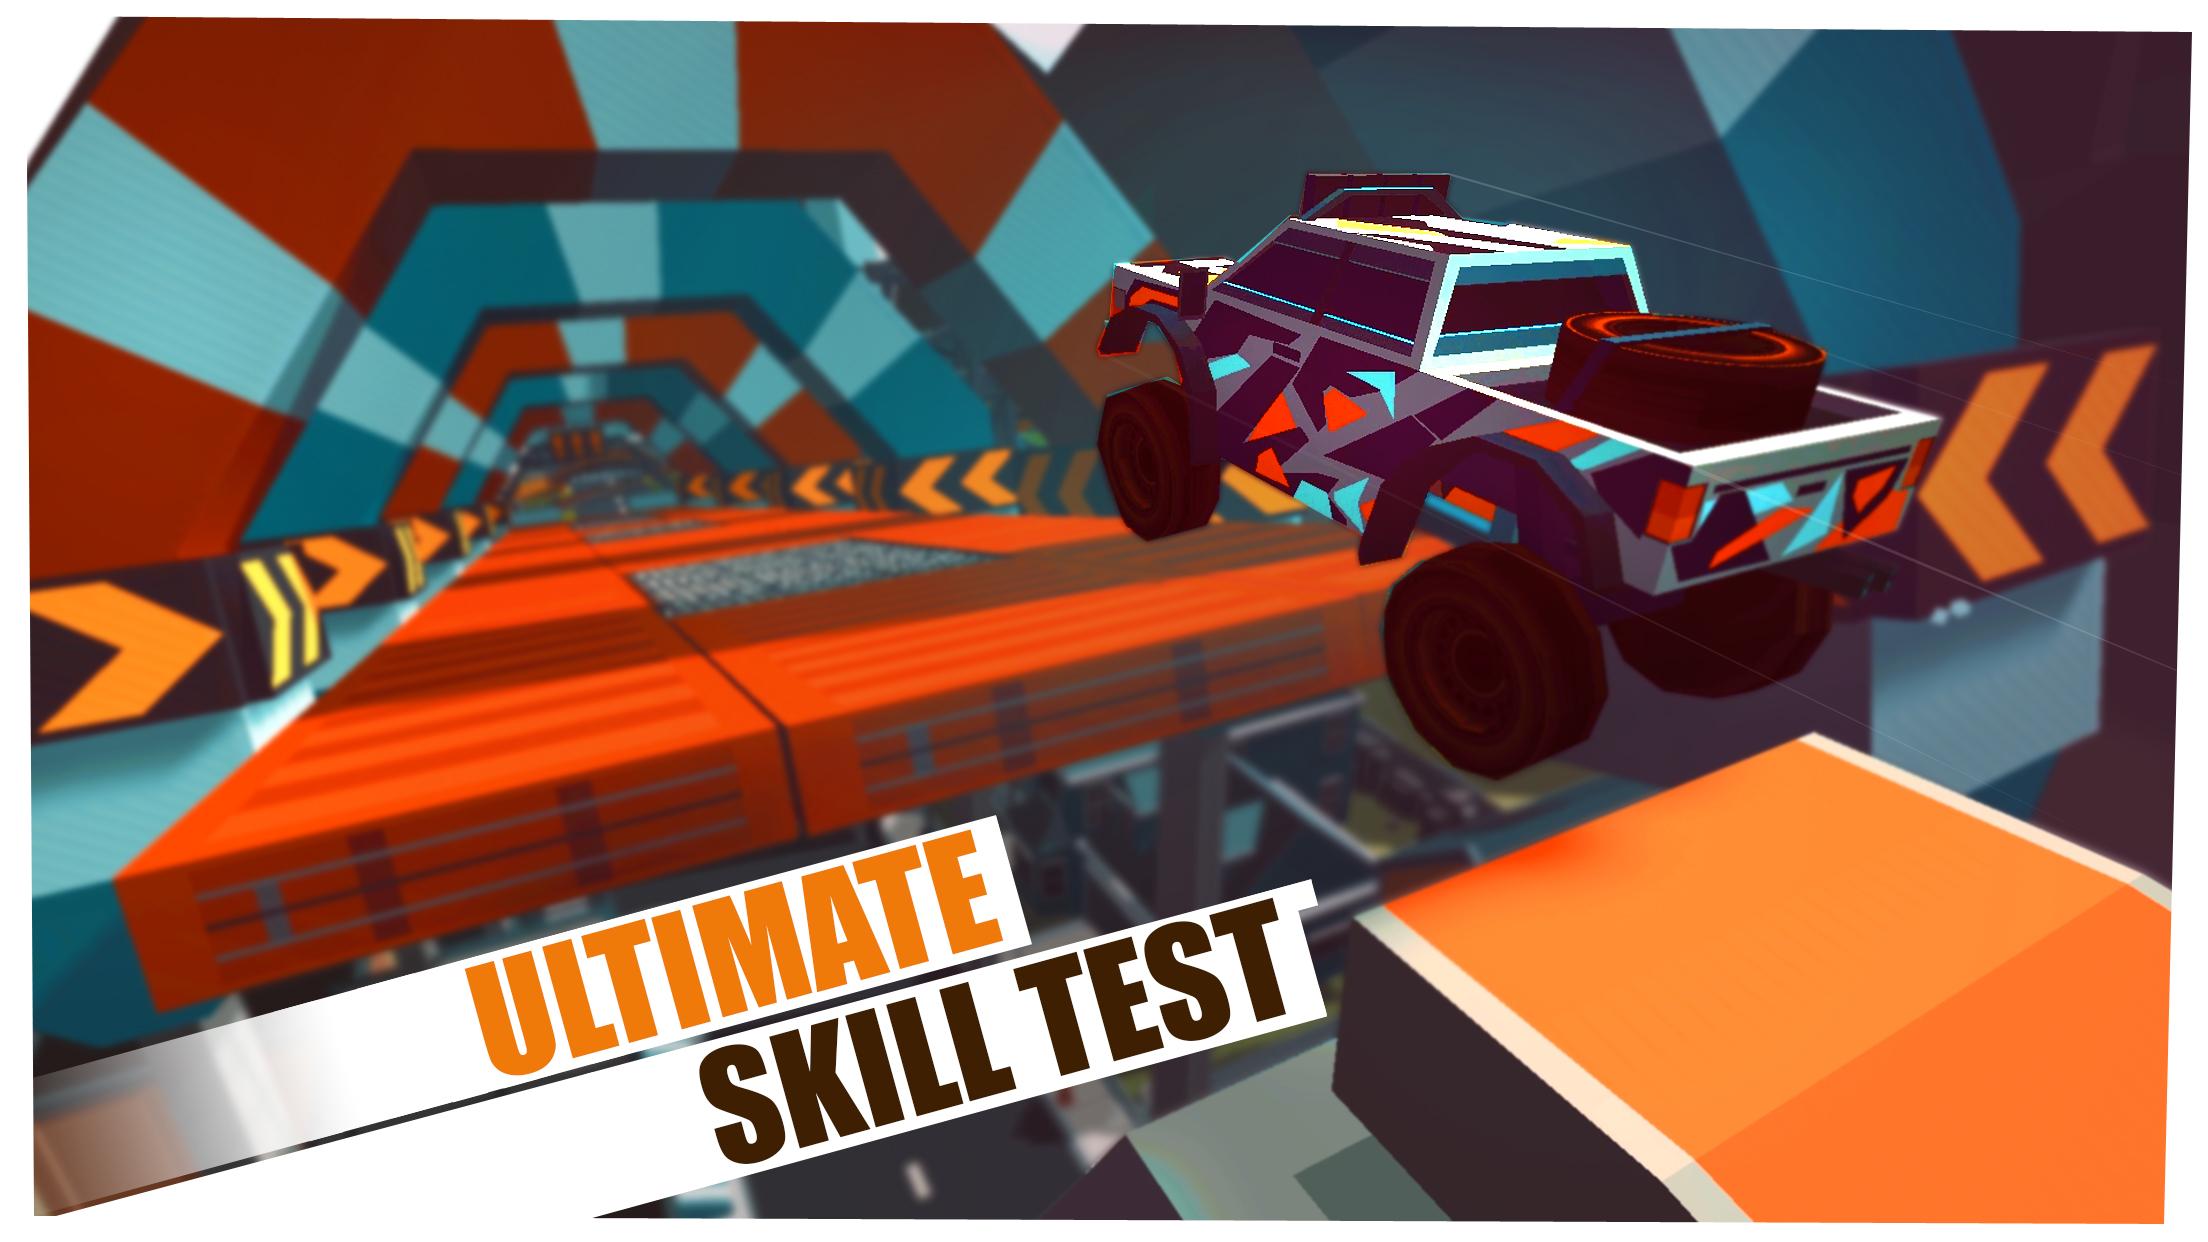 Skill Test - Extreme Stunts Racing Game 2020 2.27 Screenshot 2